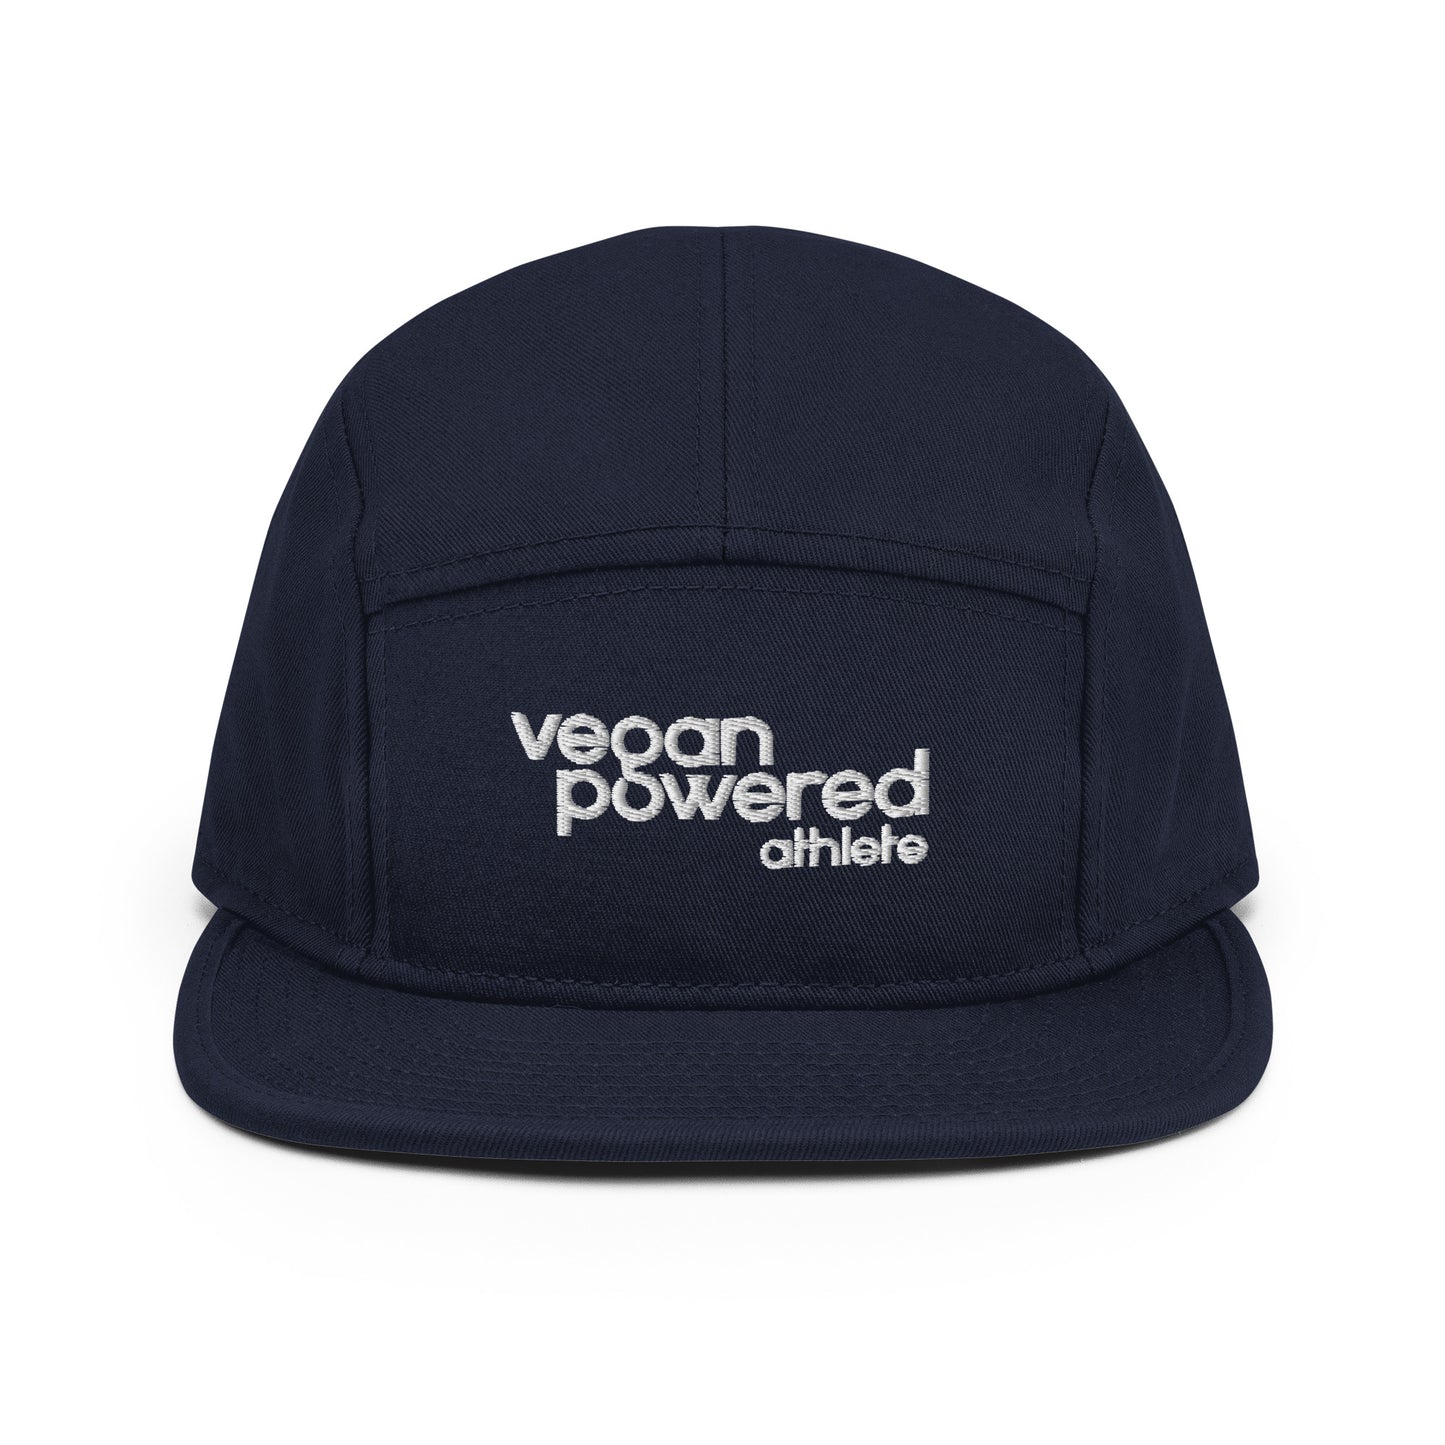 vegan powered athlete 5 Panel Camper